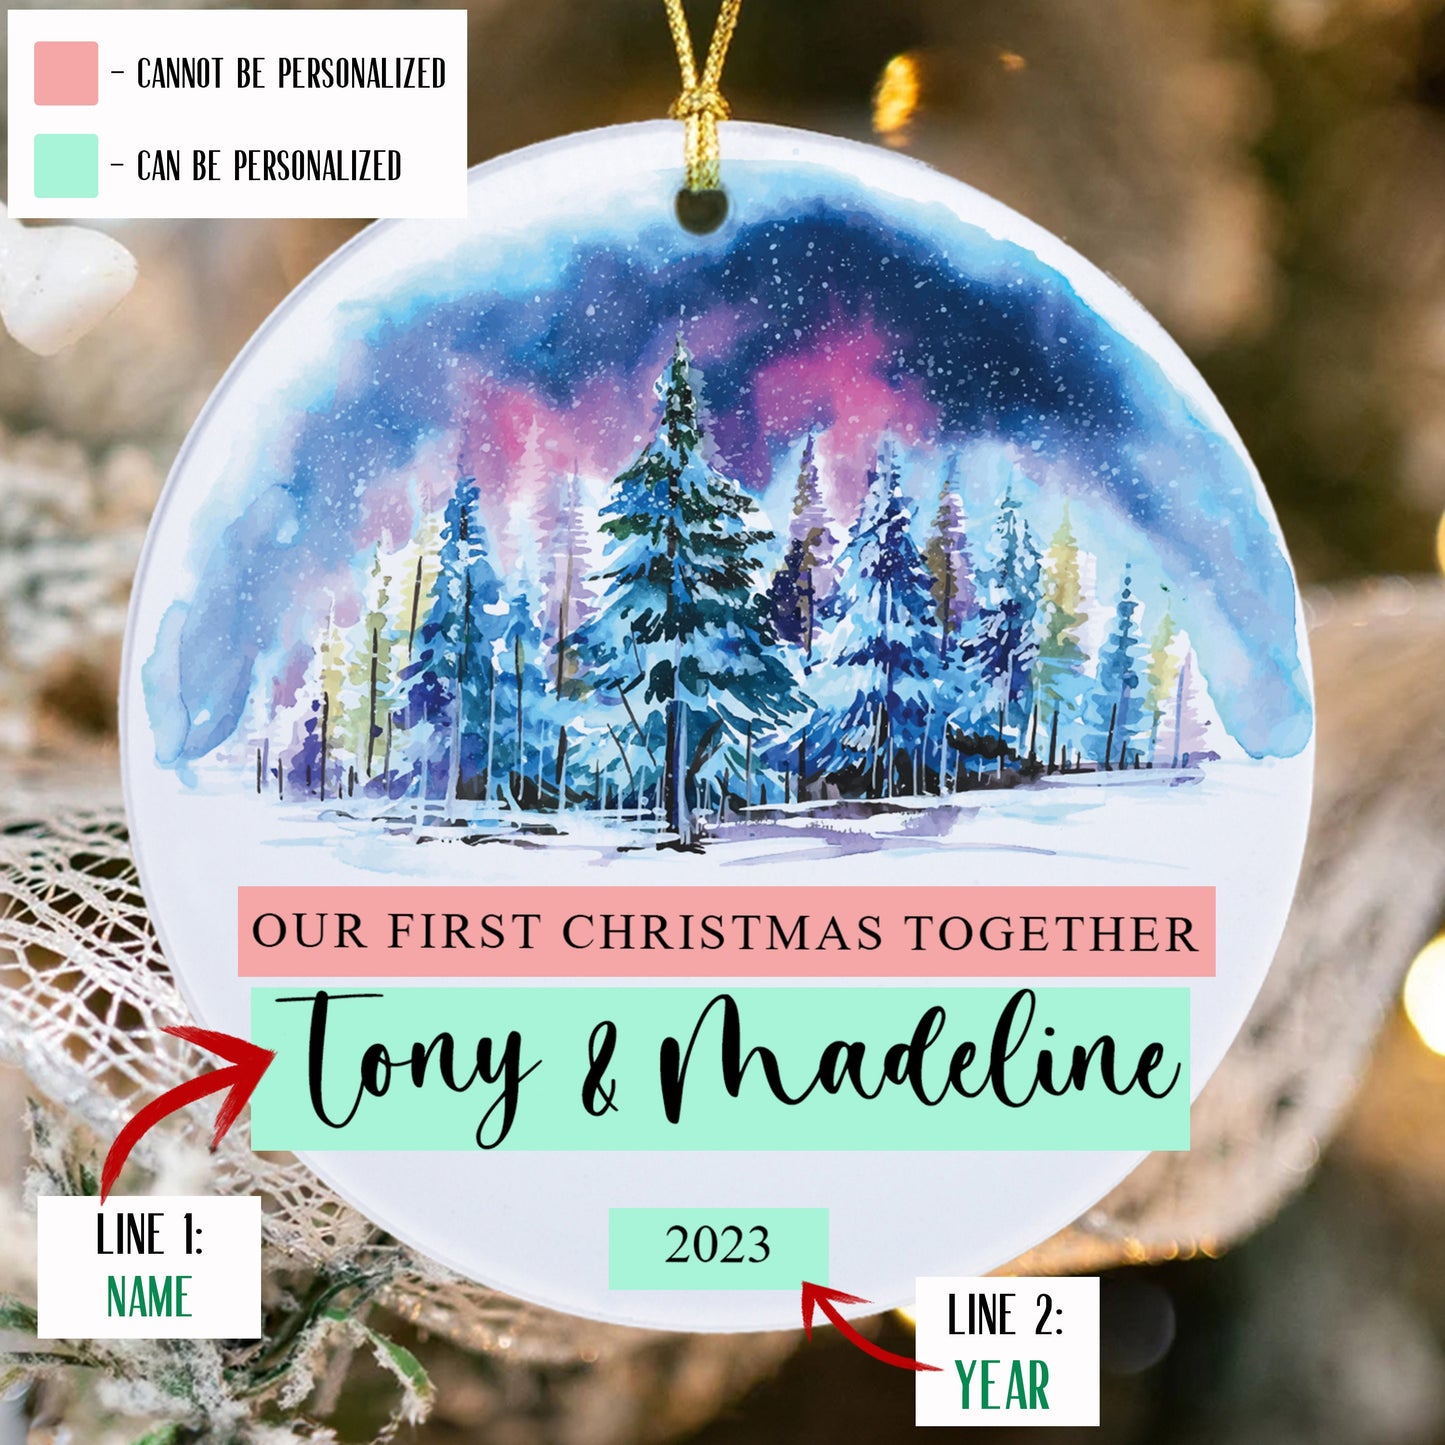 First Christmas Married Ornament, Newlywed Gift, Mr & Mrs Christmas Ornament, Personalized Mr Mrs Wedding Ornament, Wedding Gift Keepsake